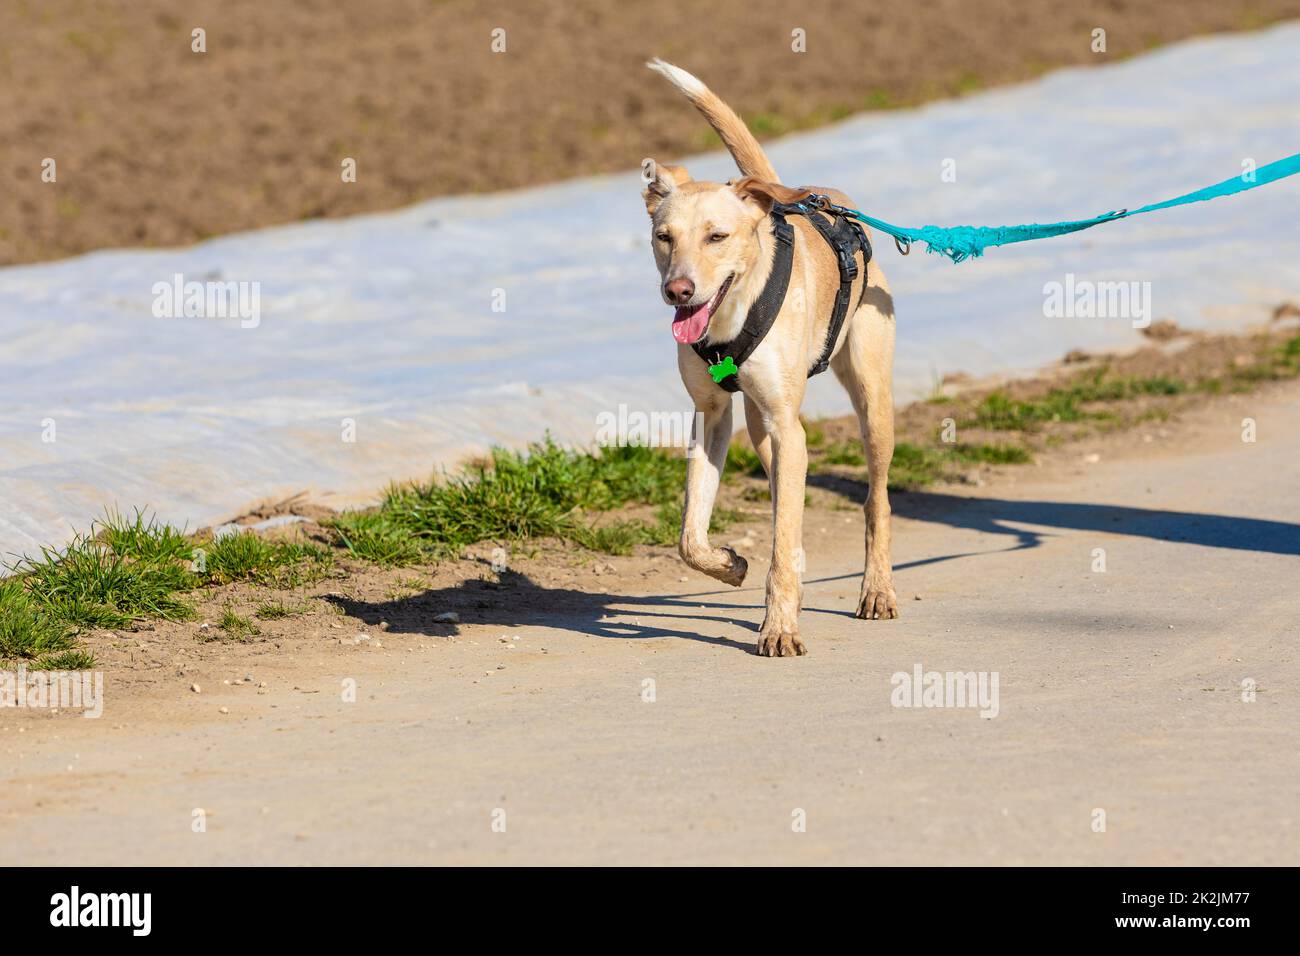 dog on leash walking along a field Stock Photo